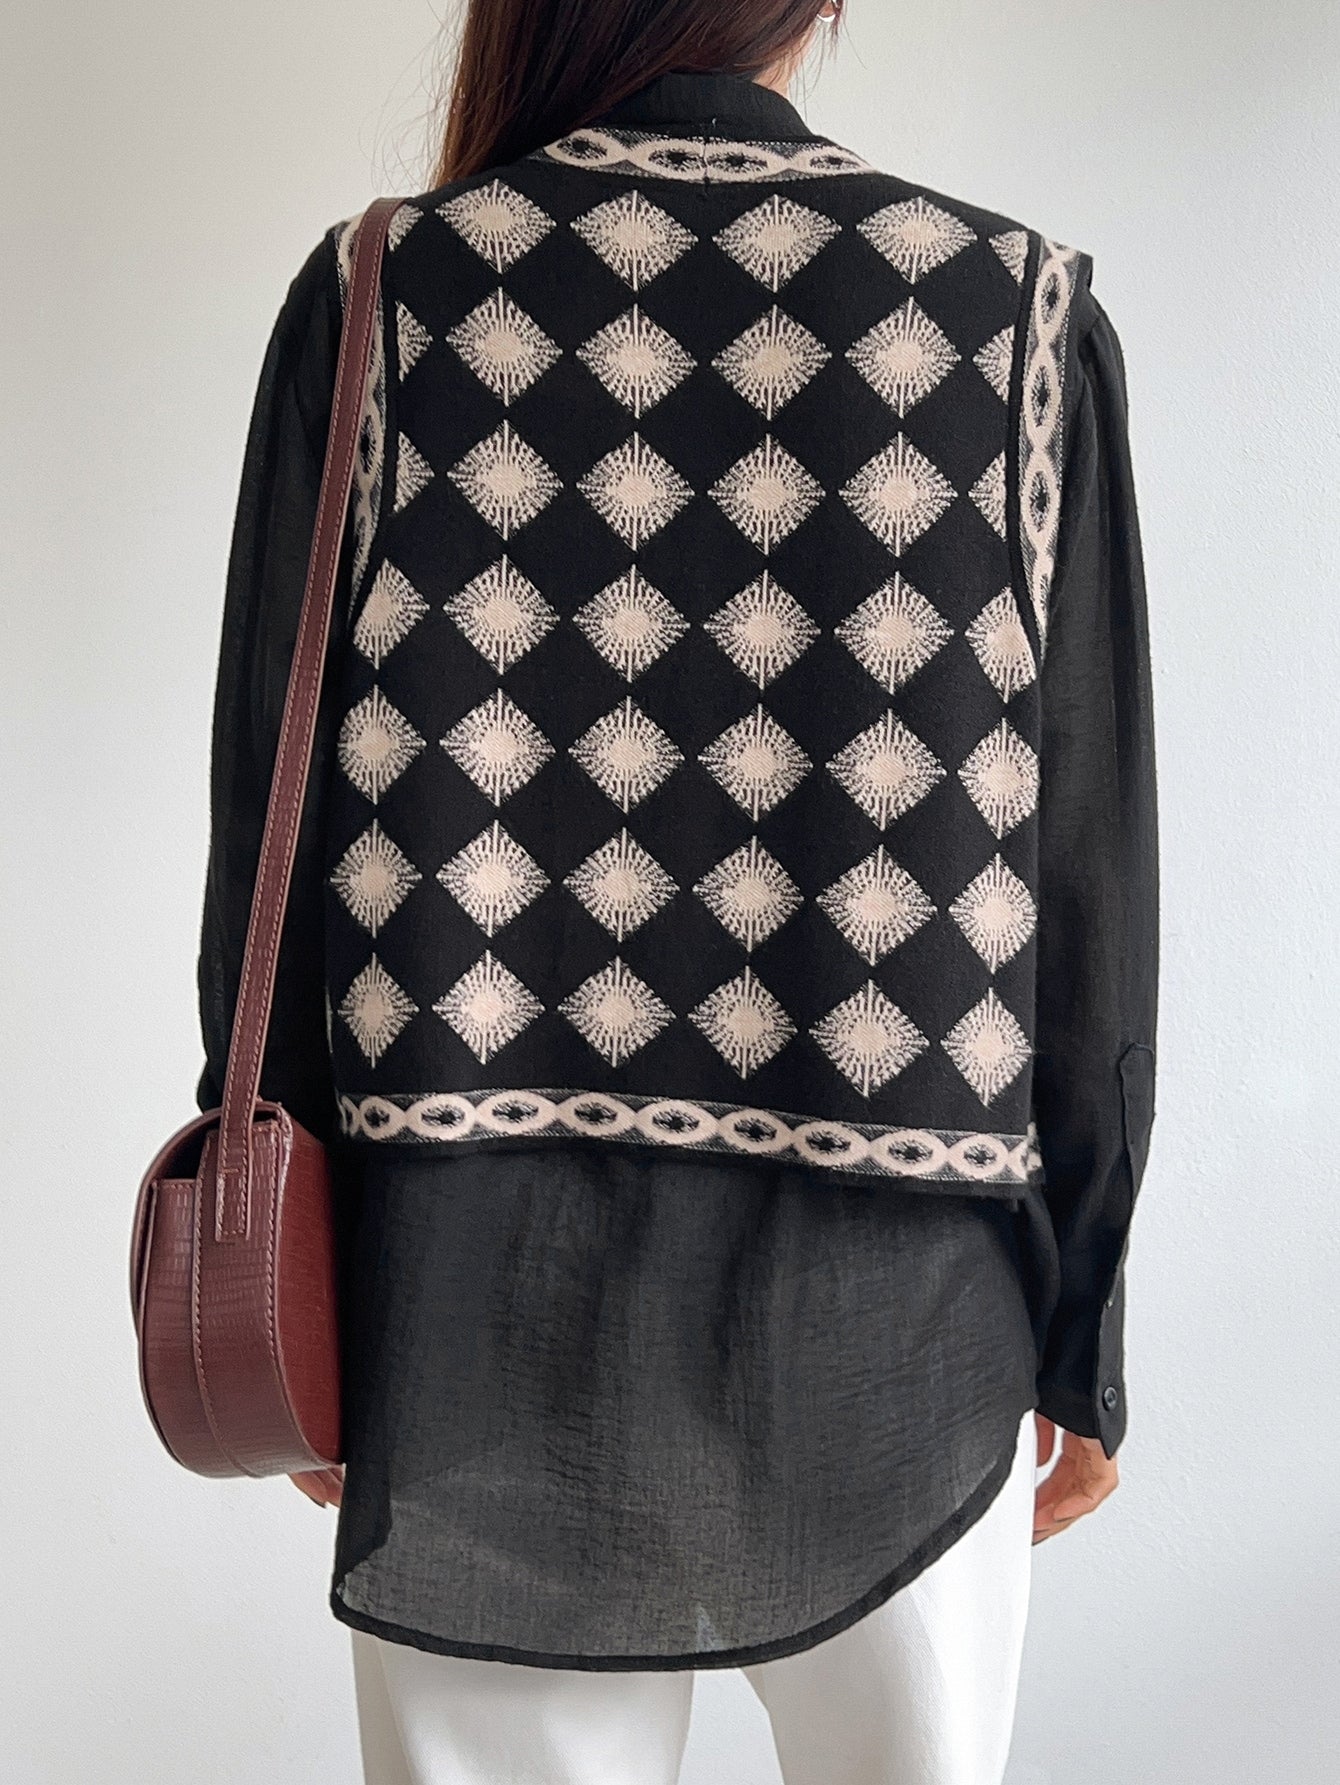 Argyle Pattern Sweater Vest Without Blouse